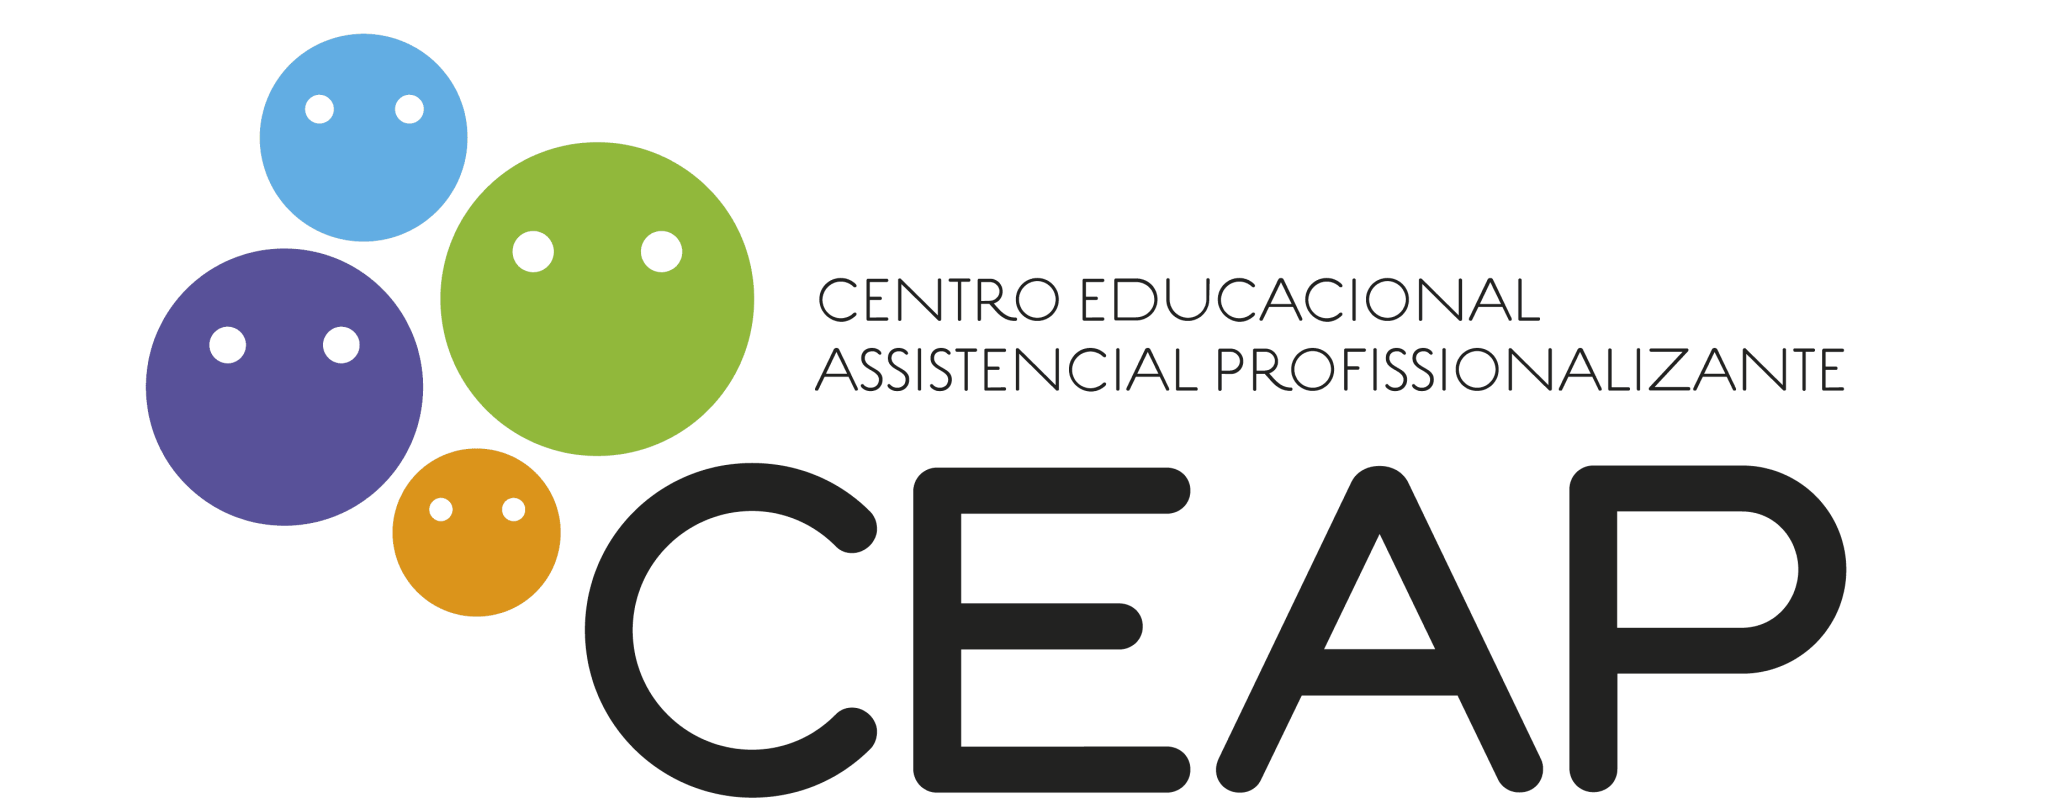 CEAP - Centro Educacional Assistencial Profissionalizante